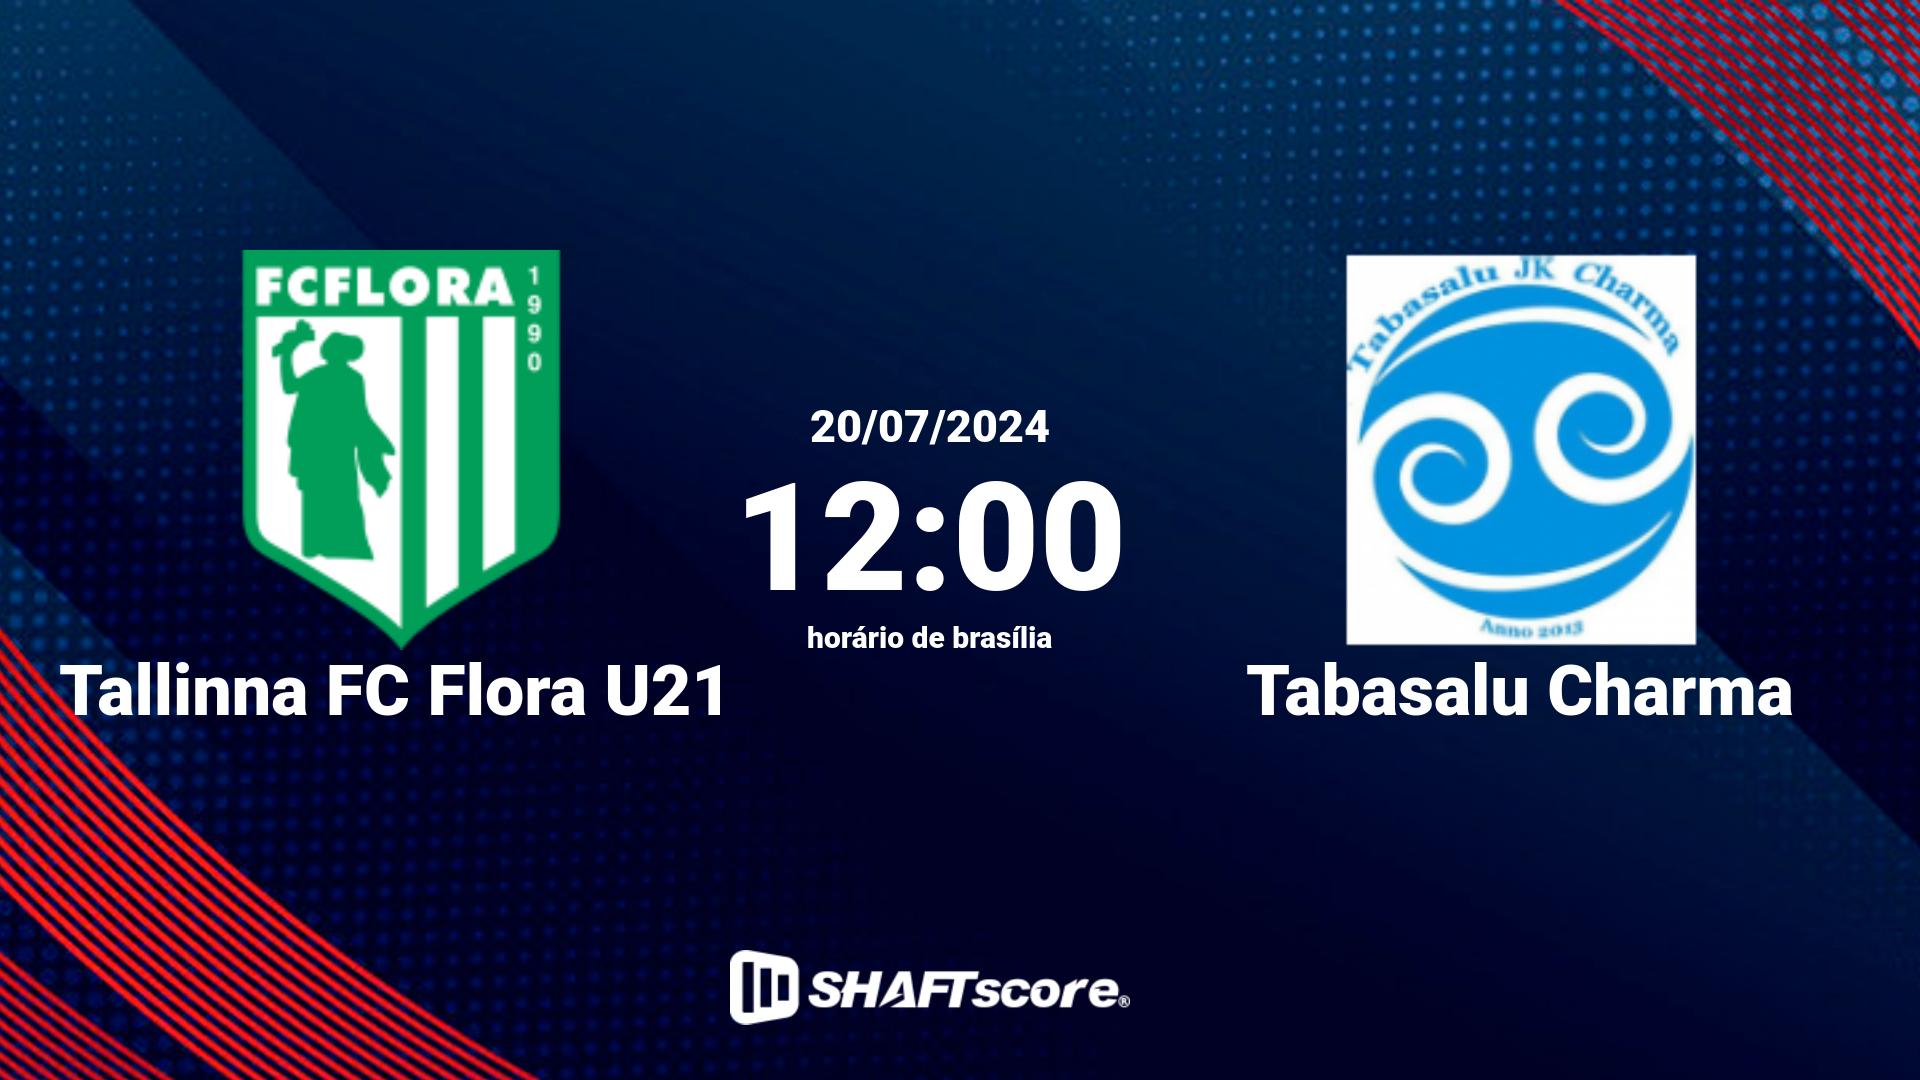 Estatísticas do jogo Tallinna FC Flora U21 vs Tabasalu Charma 20.07 12:00